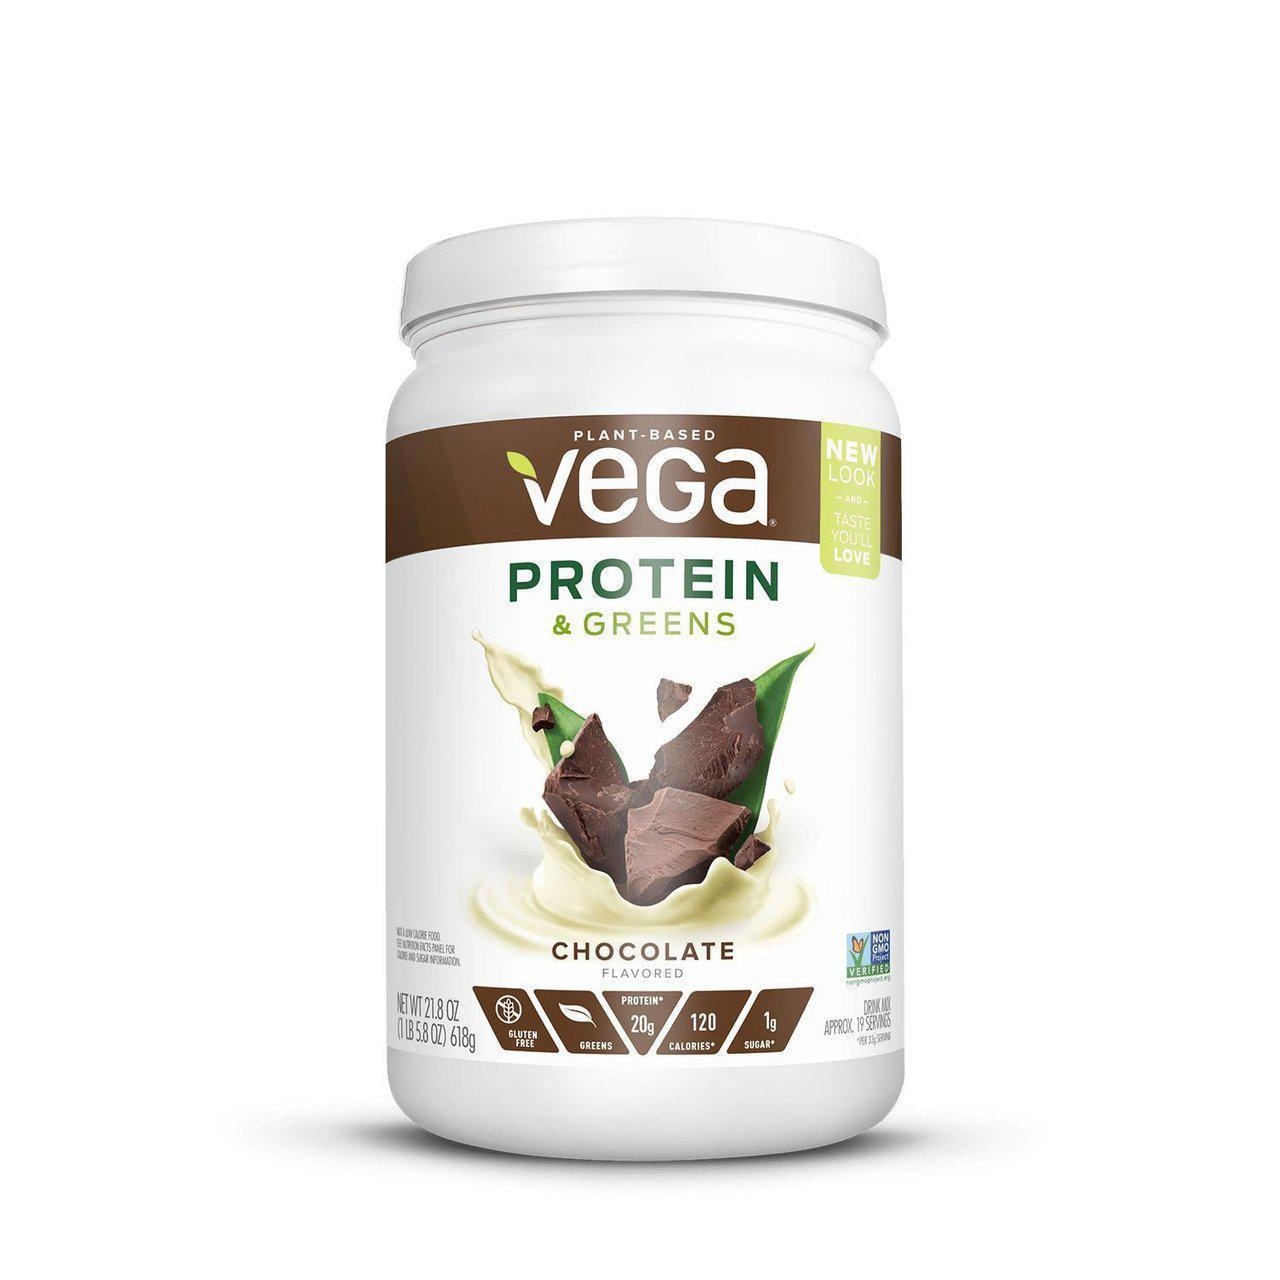 Nature's Remedies - Vega Protein & Greens